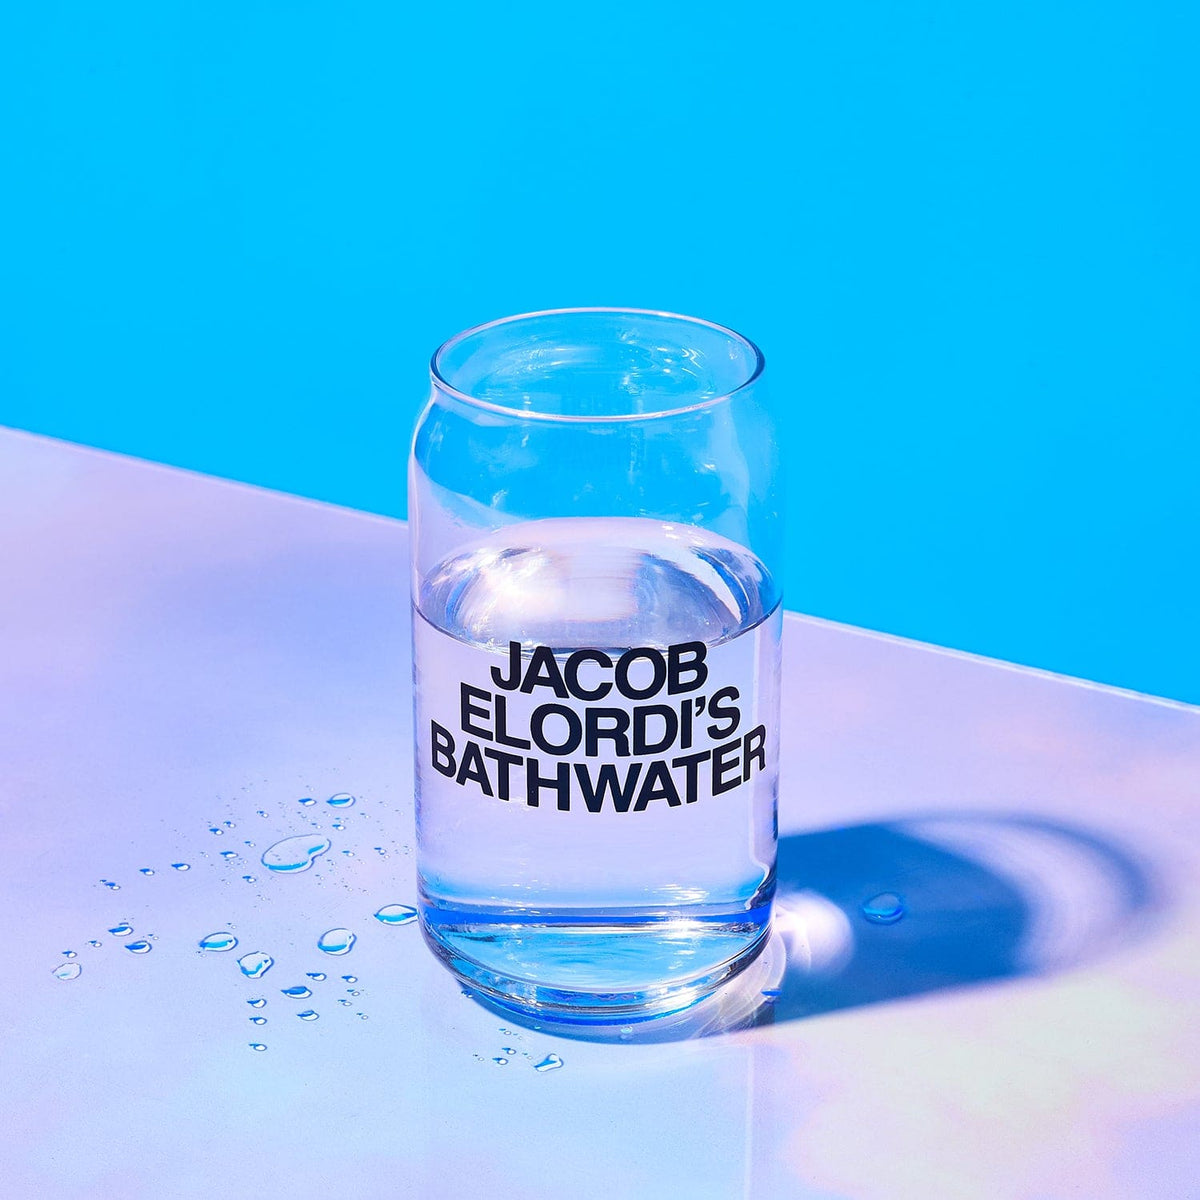 Jacob Elordi’s Bath Water Beer Glass Bachelorette Gifts